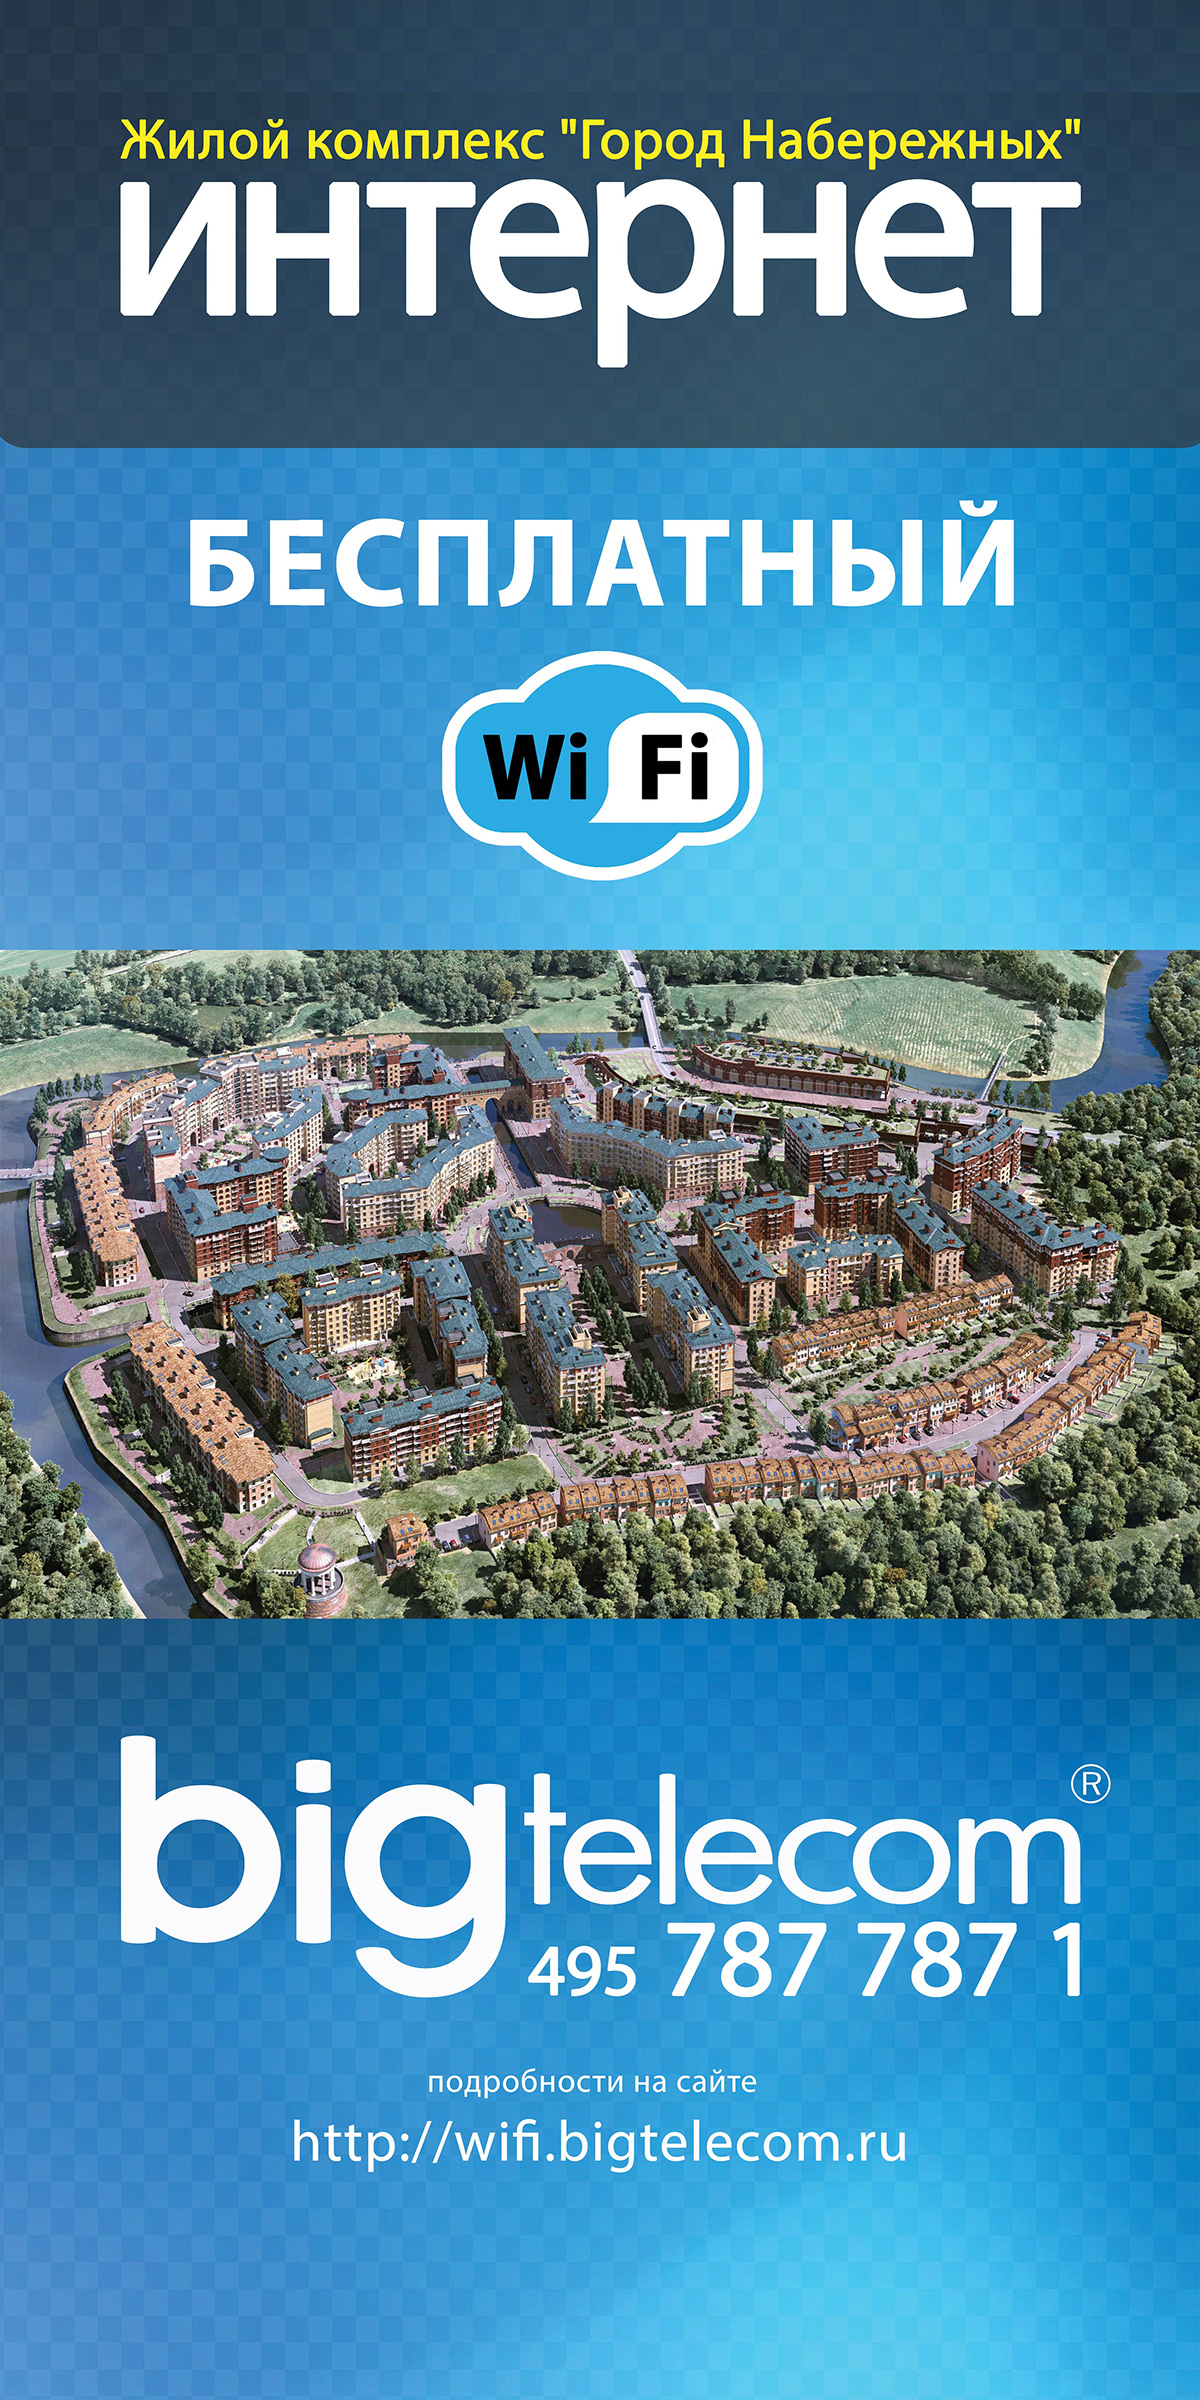 Internet IT logo wifi интернет логотип